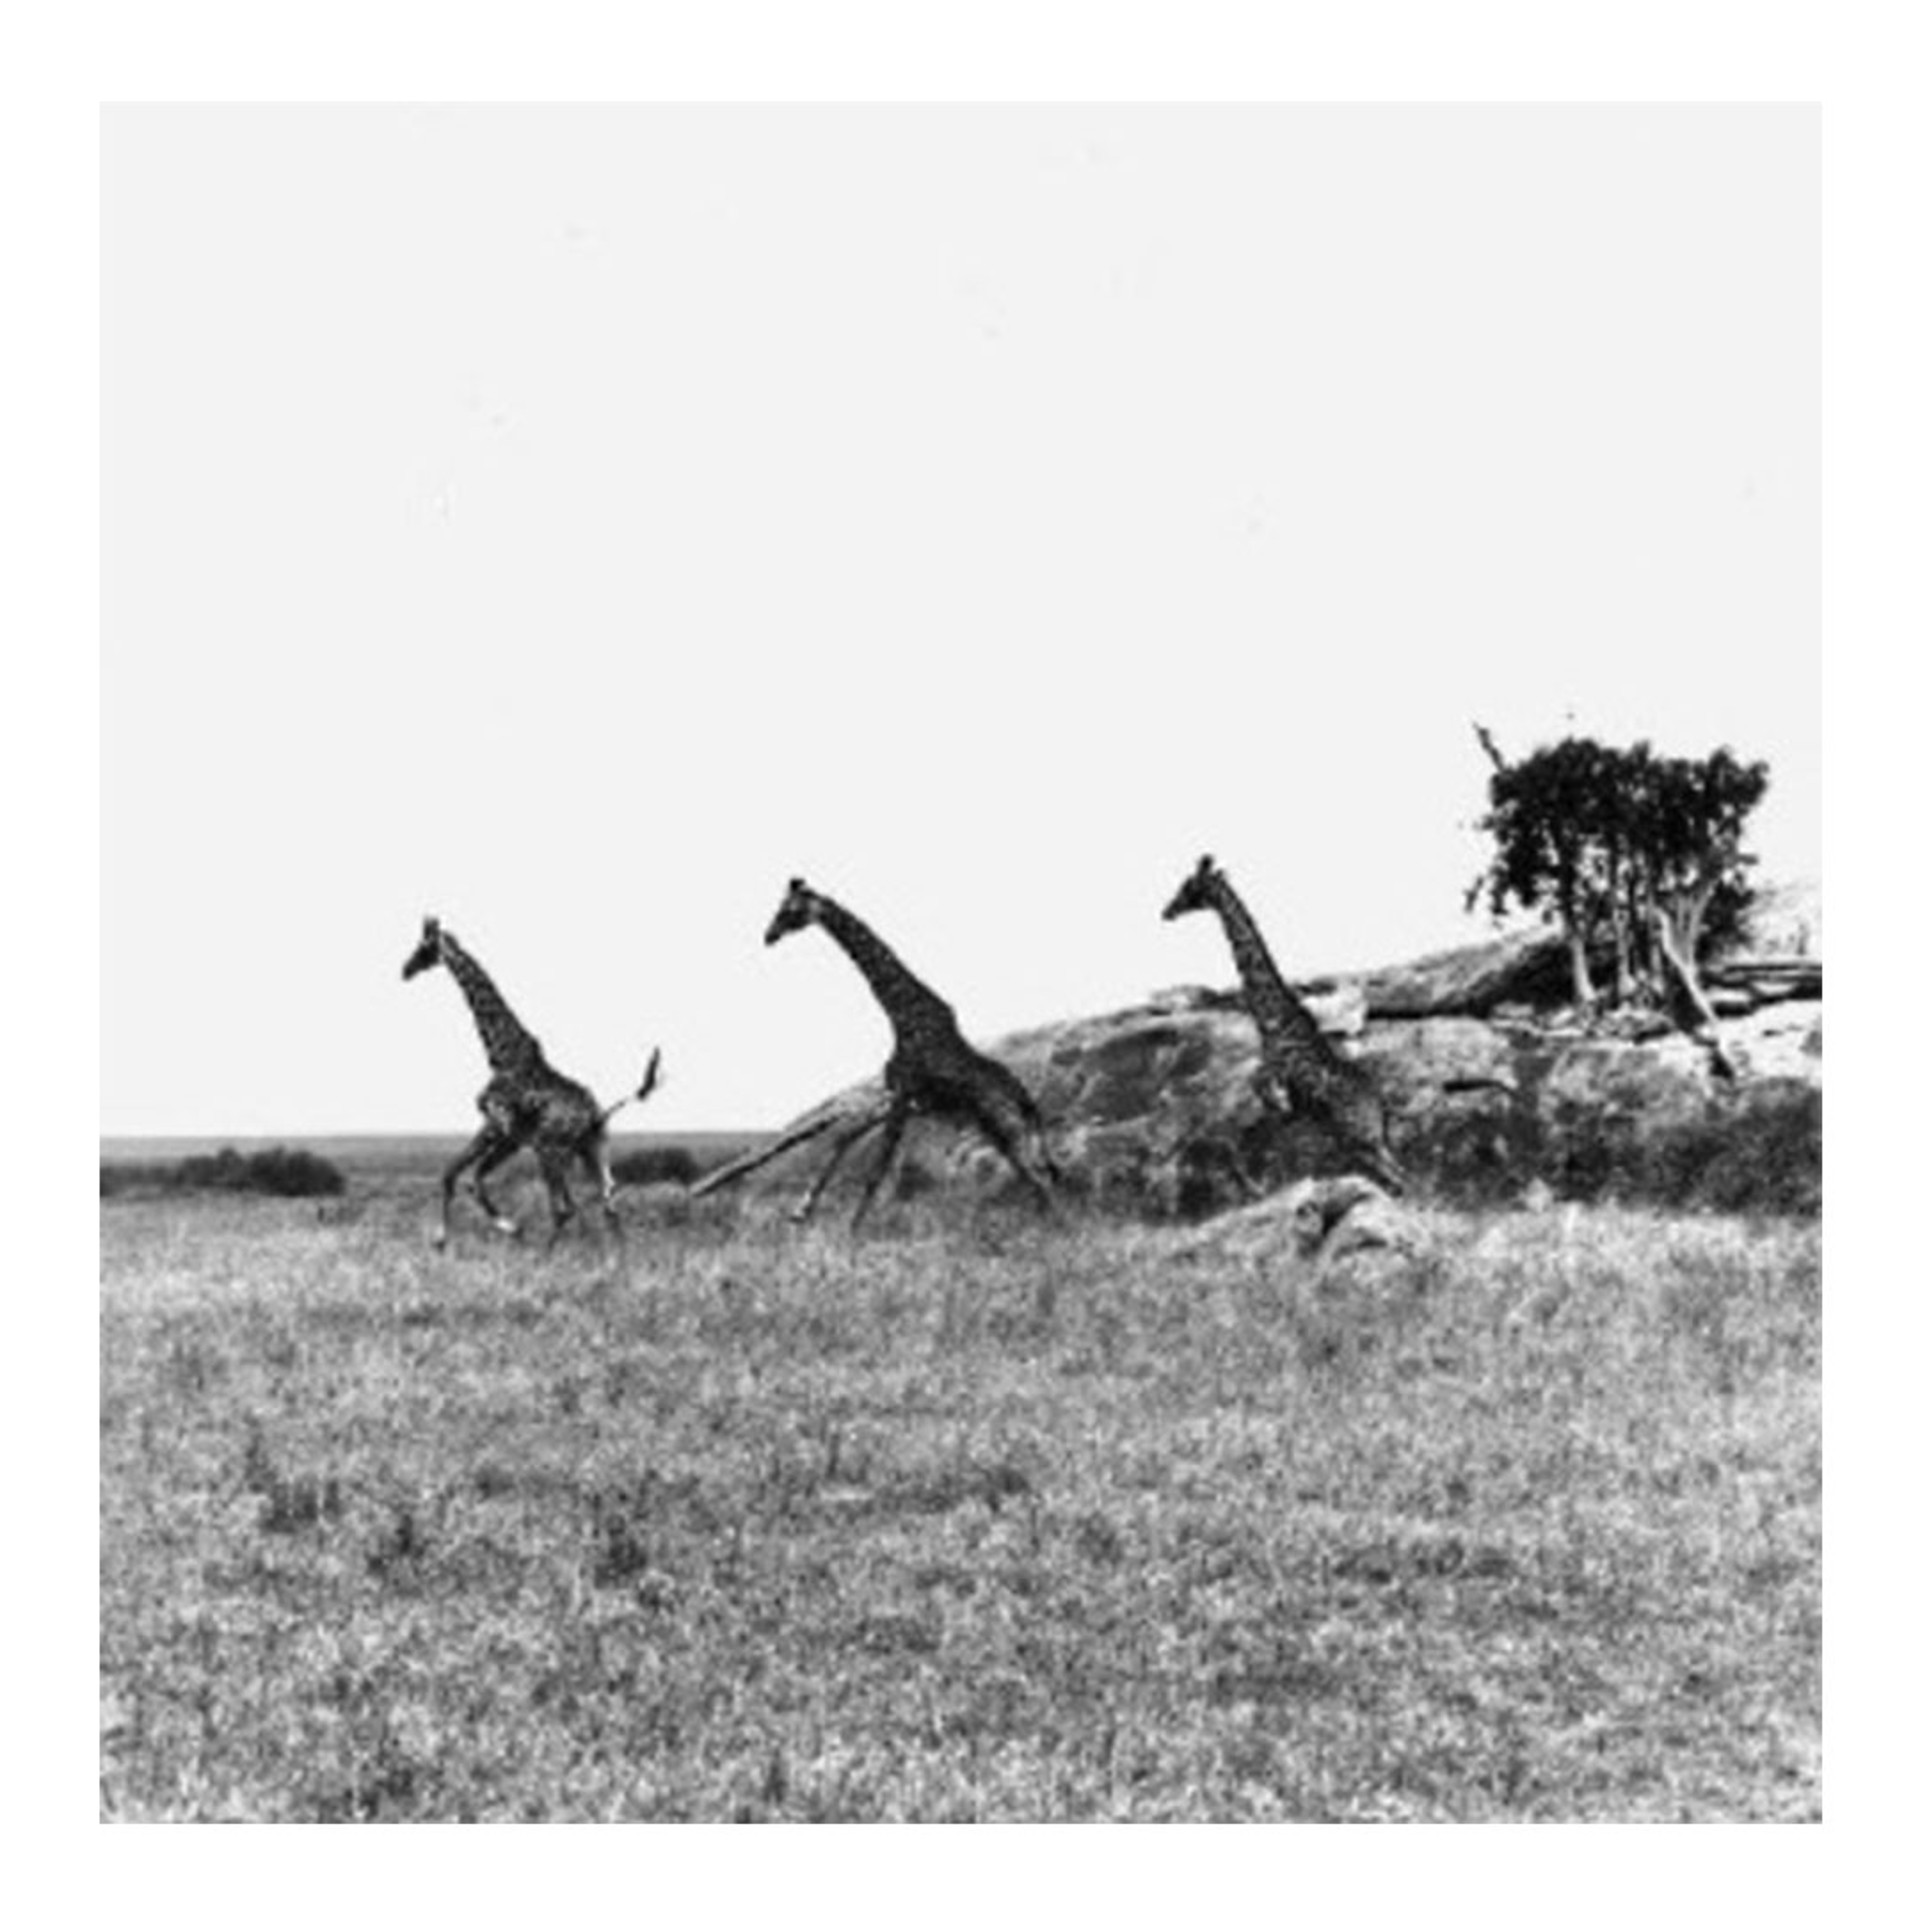 Giraffes (Tanzania) by Patrick Demarchelier